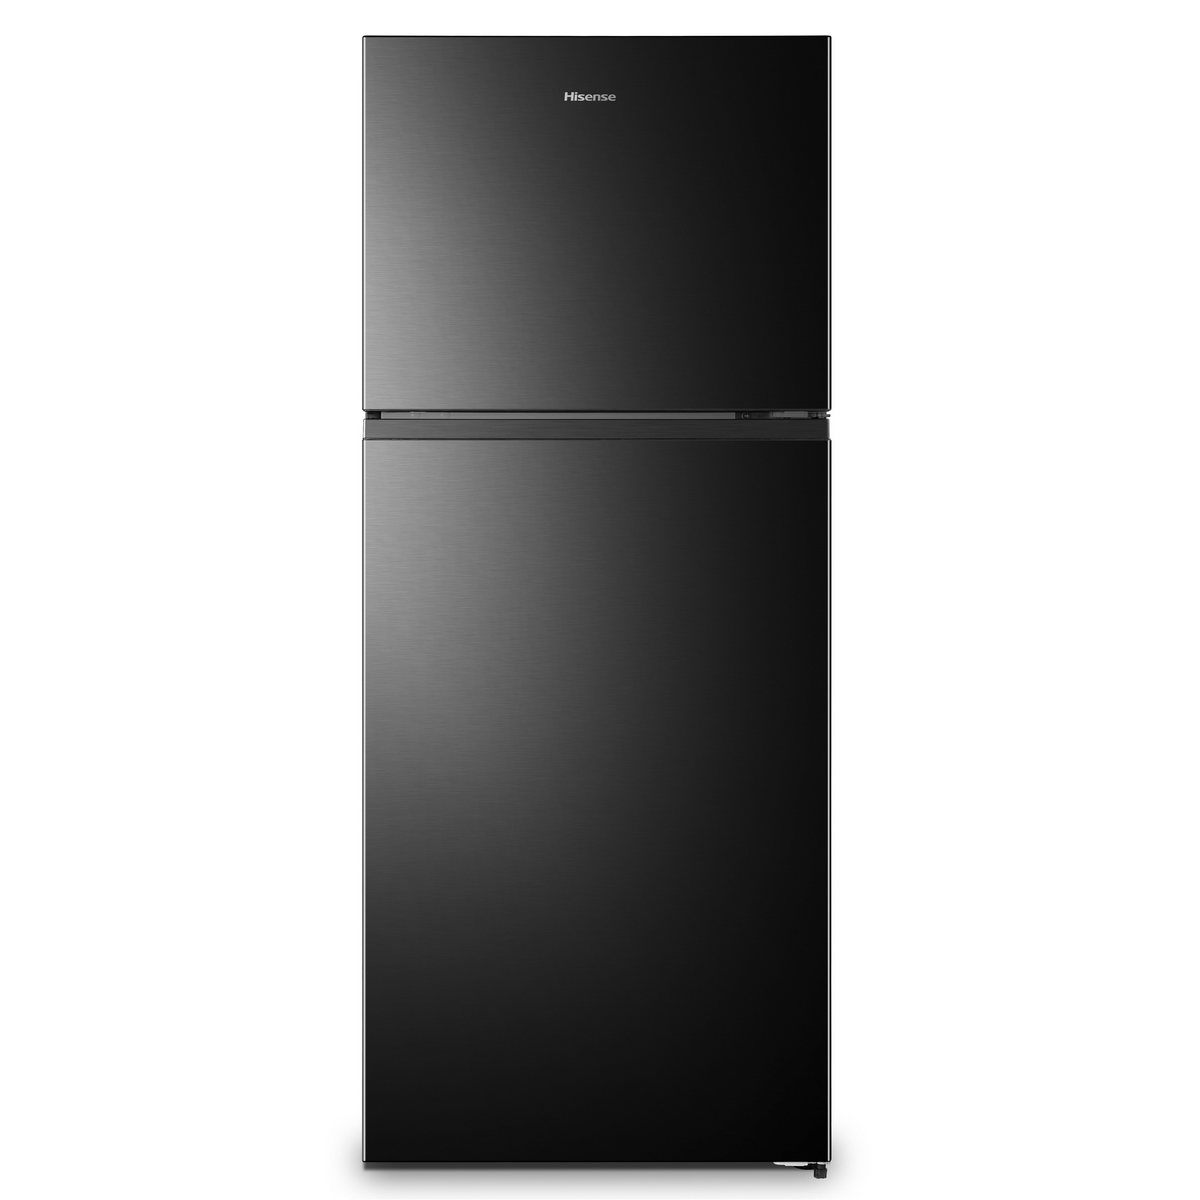 Hisense Double Doors Refrigerator (13.8 Cubic, Black) RT488NAF1